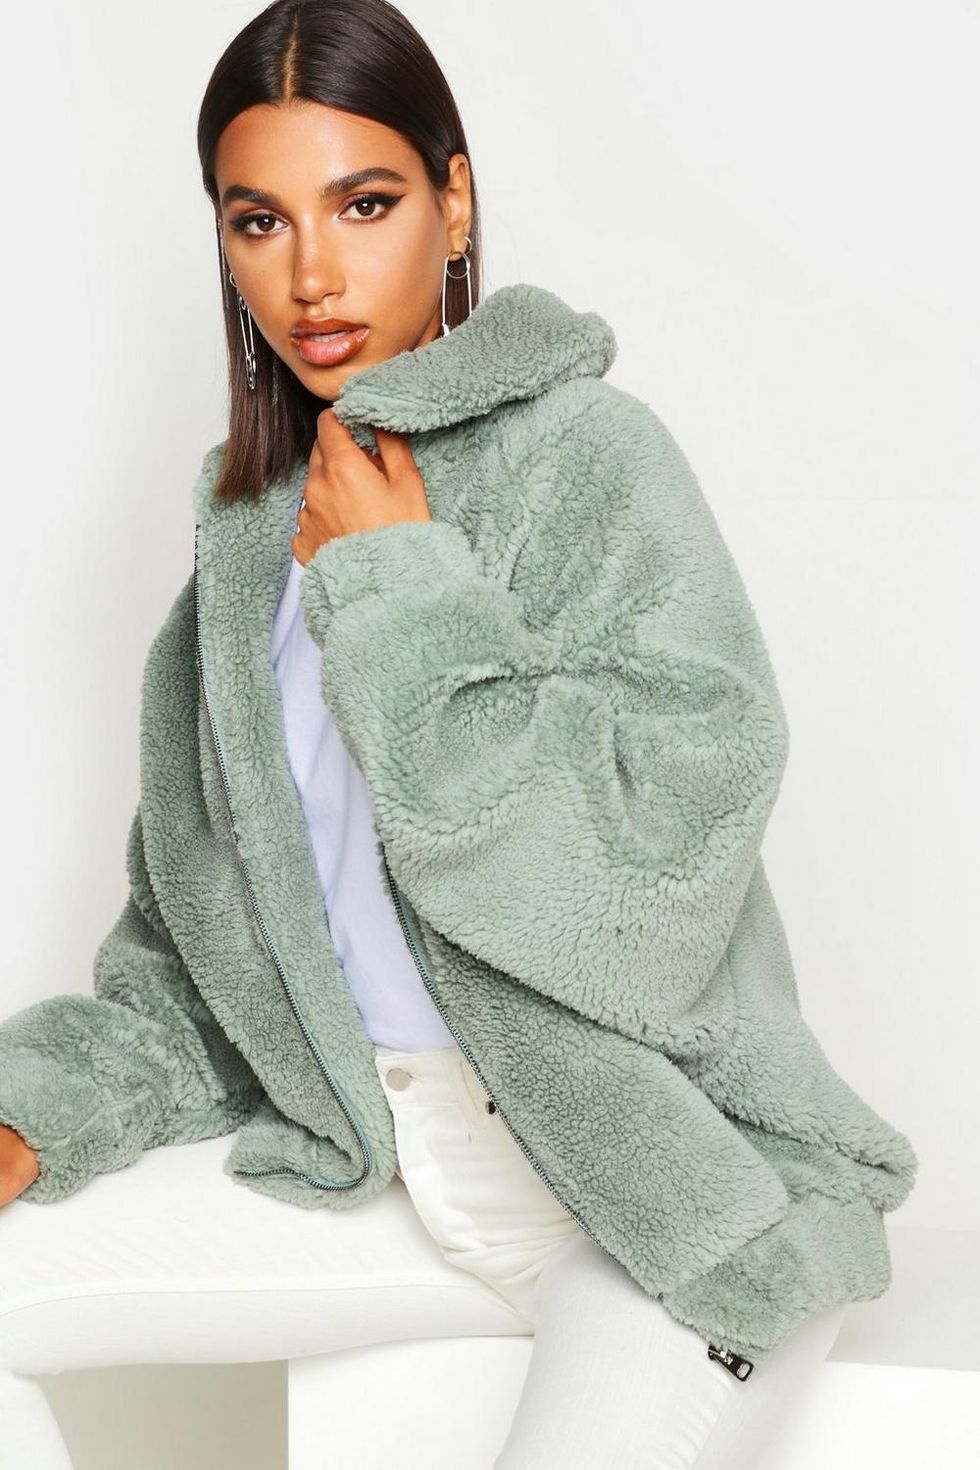 Shop Selena Gomez's Green Fur Coat from 